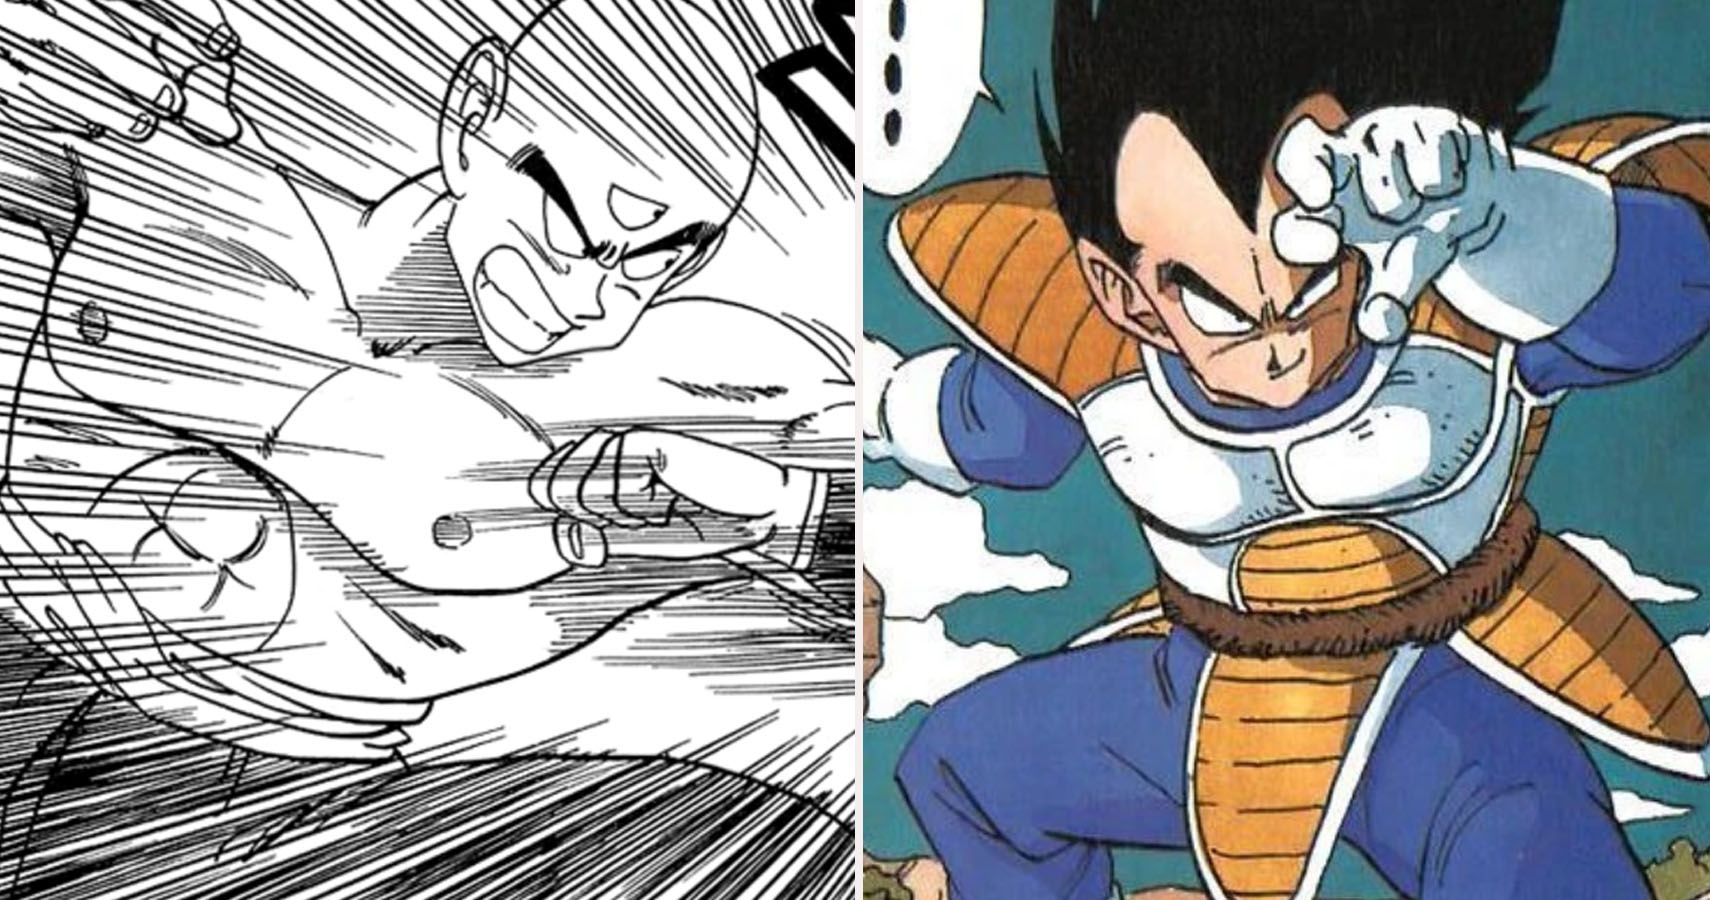 Goku and Vegeta. Throwback to their first fight. Those legendary stances! |  Dragon ball super goku, Dragon ball super, Dragon ball super manga